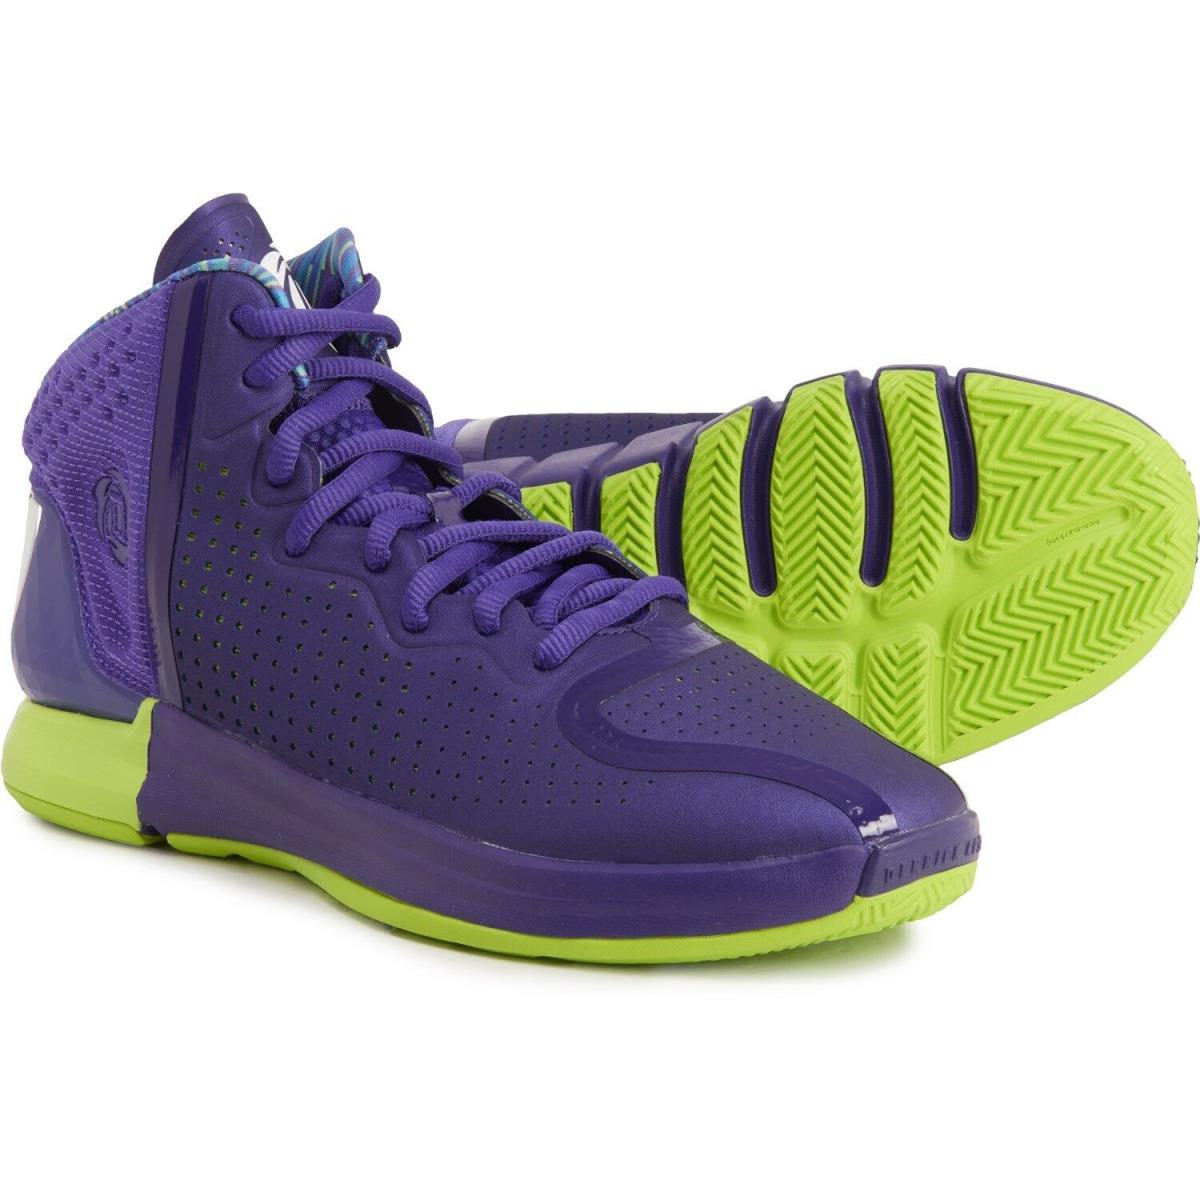 Adidas D Rose 4 Restomod Basketball Shoes For Men Size 9